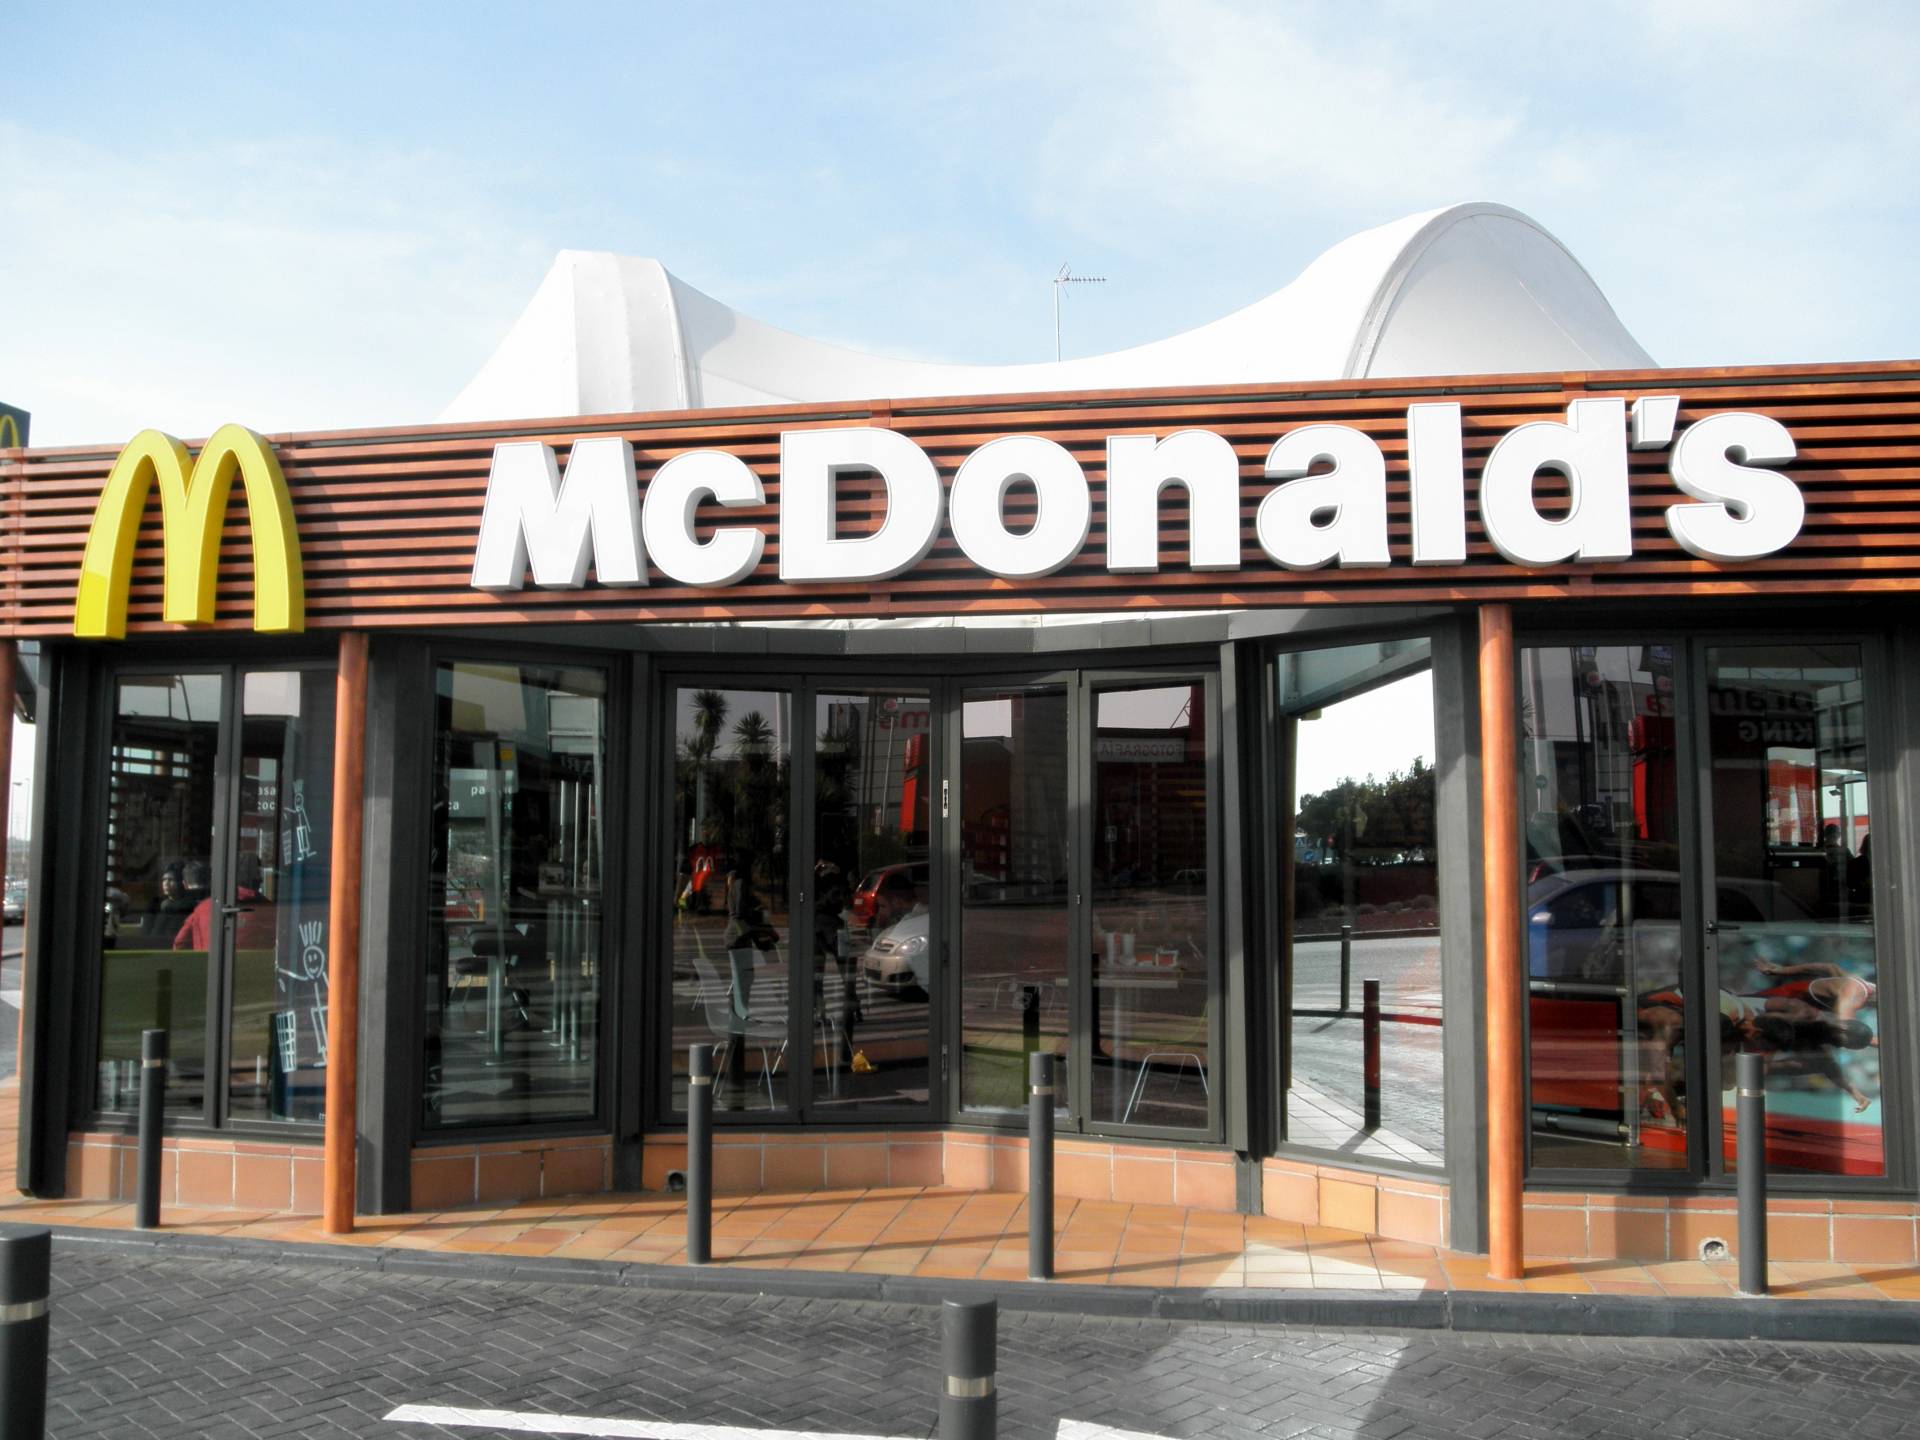 Restaurante McDonald's